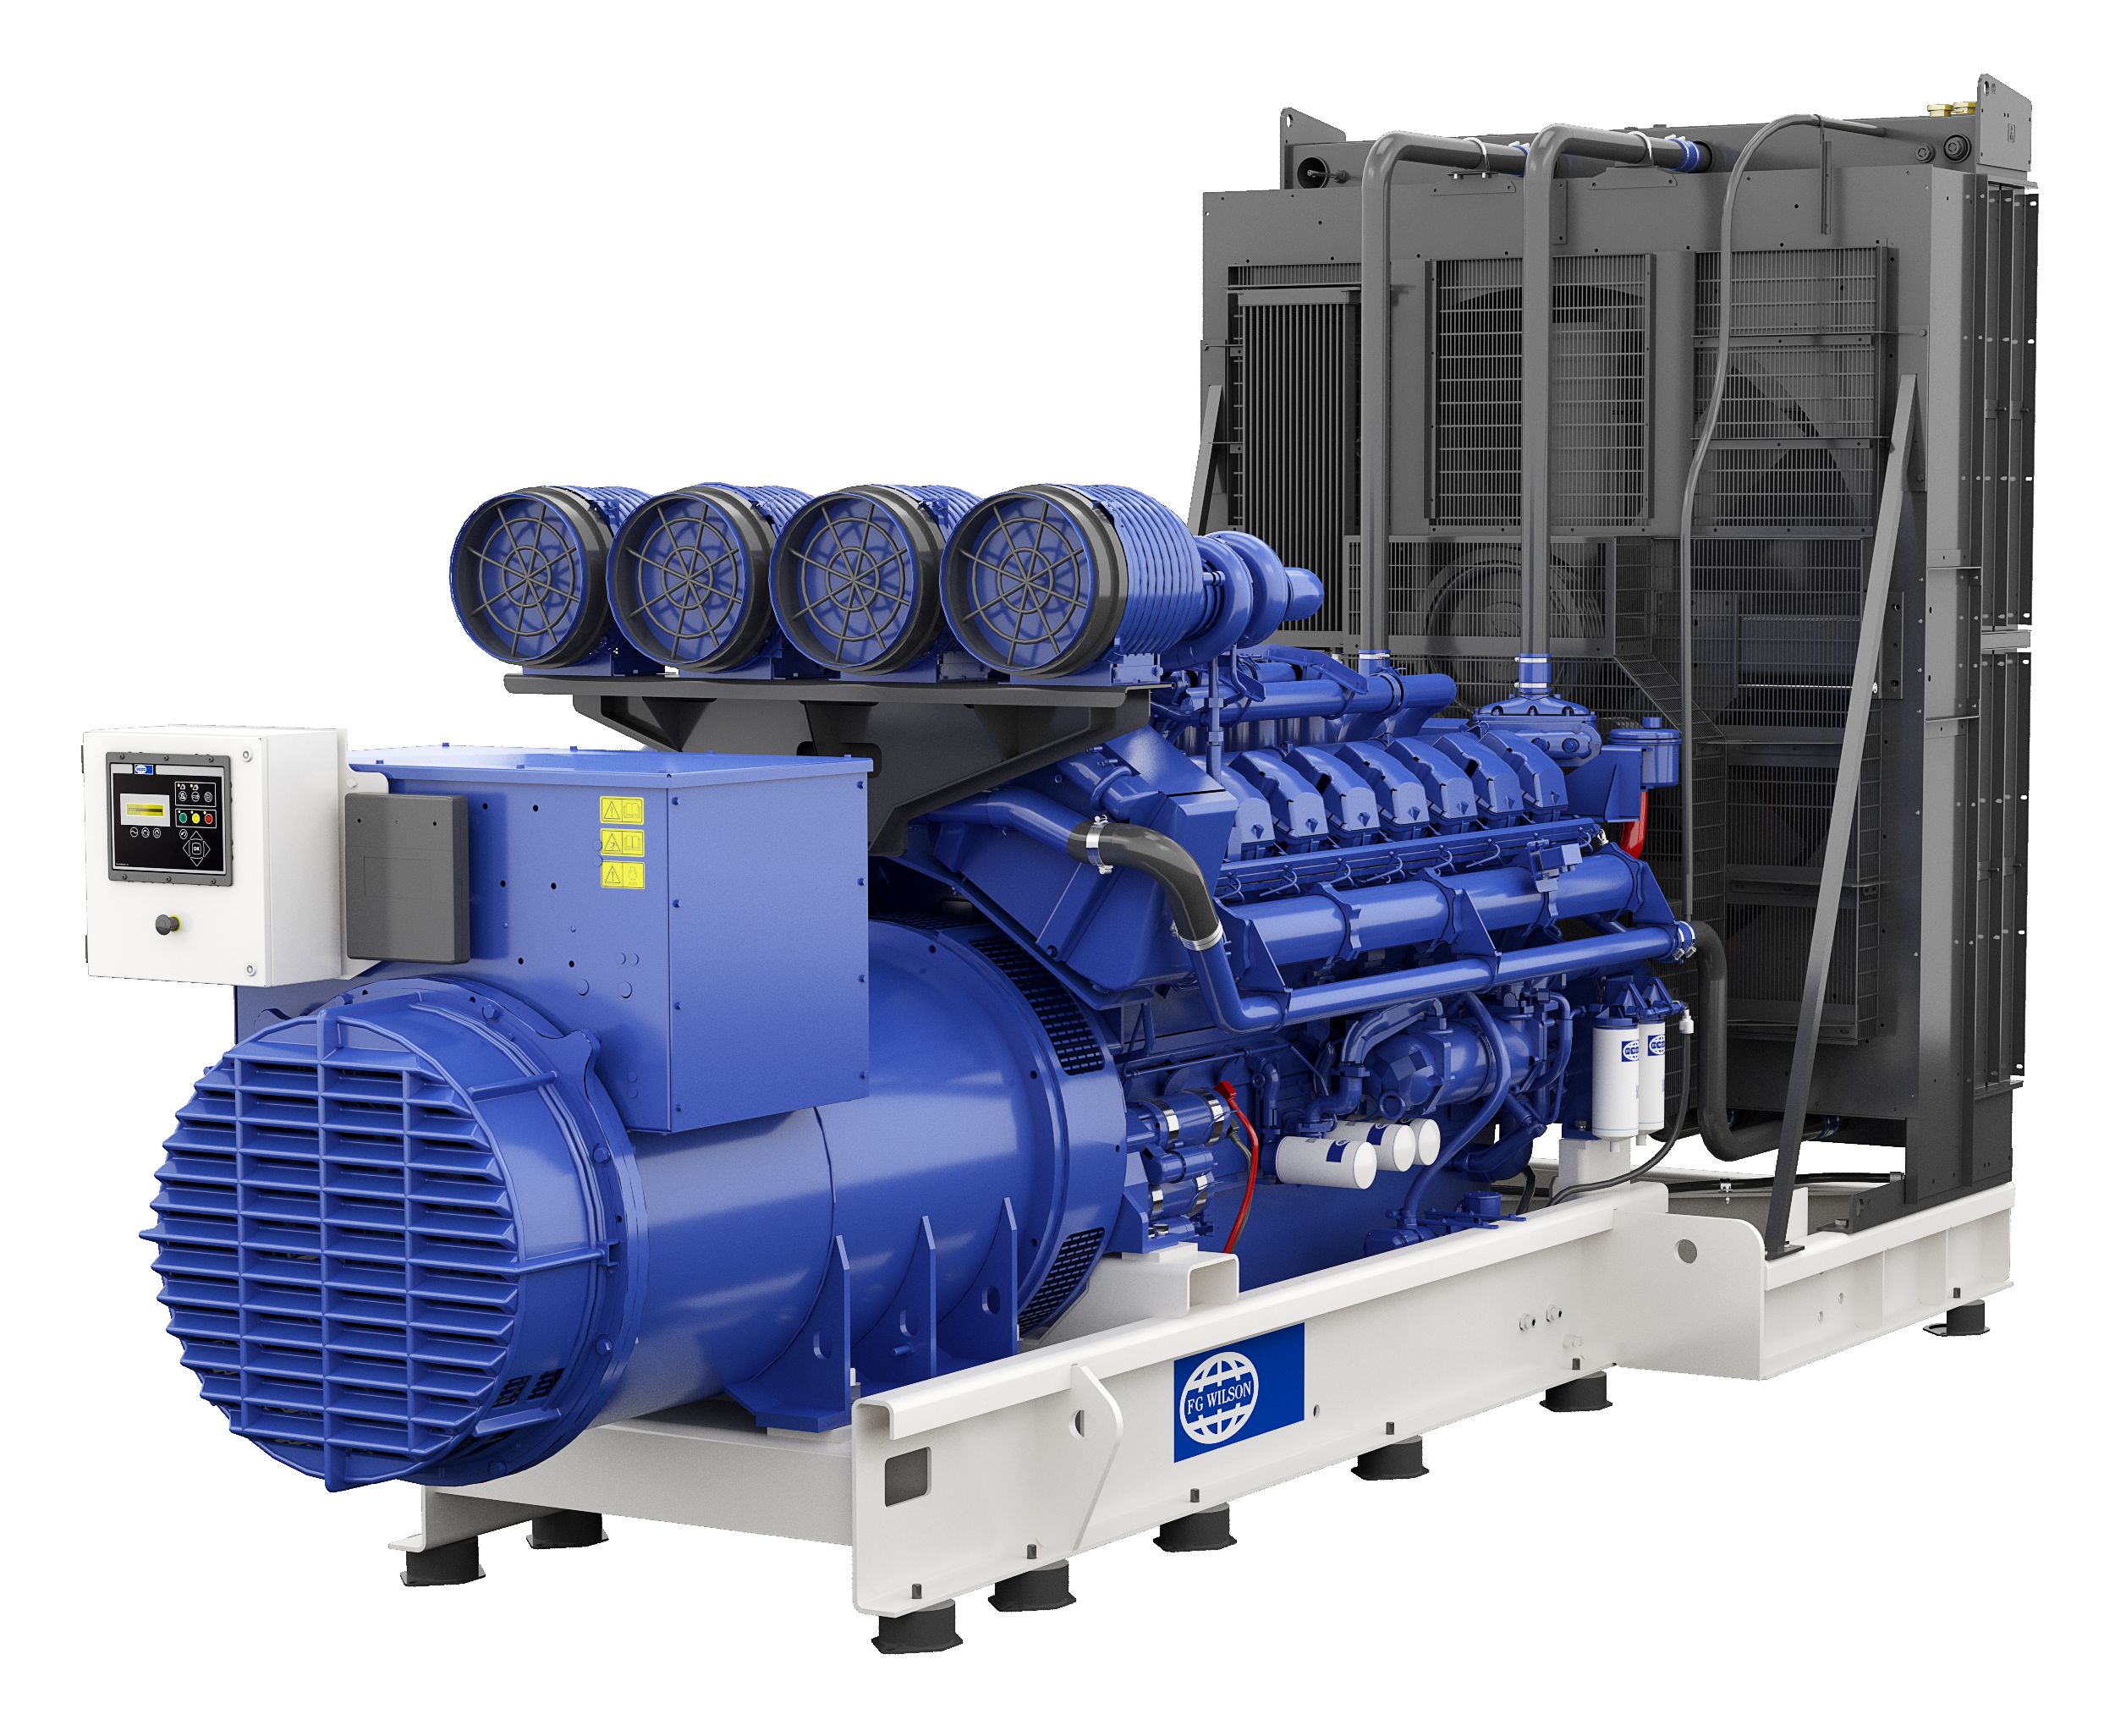 FG Wilson Generator Manufacturer, Power Generator Company